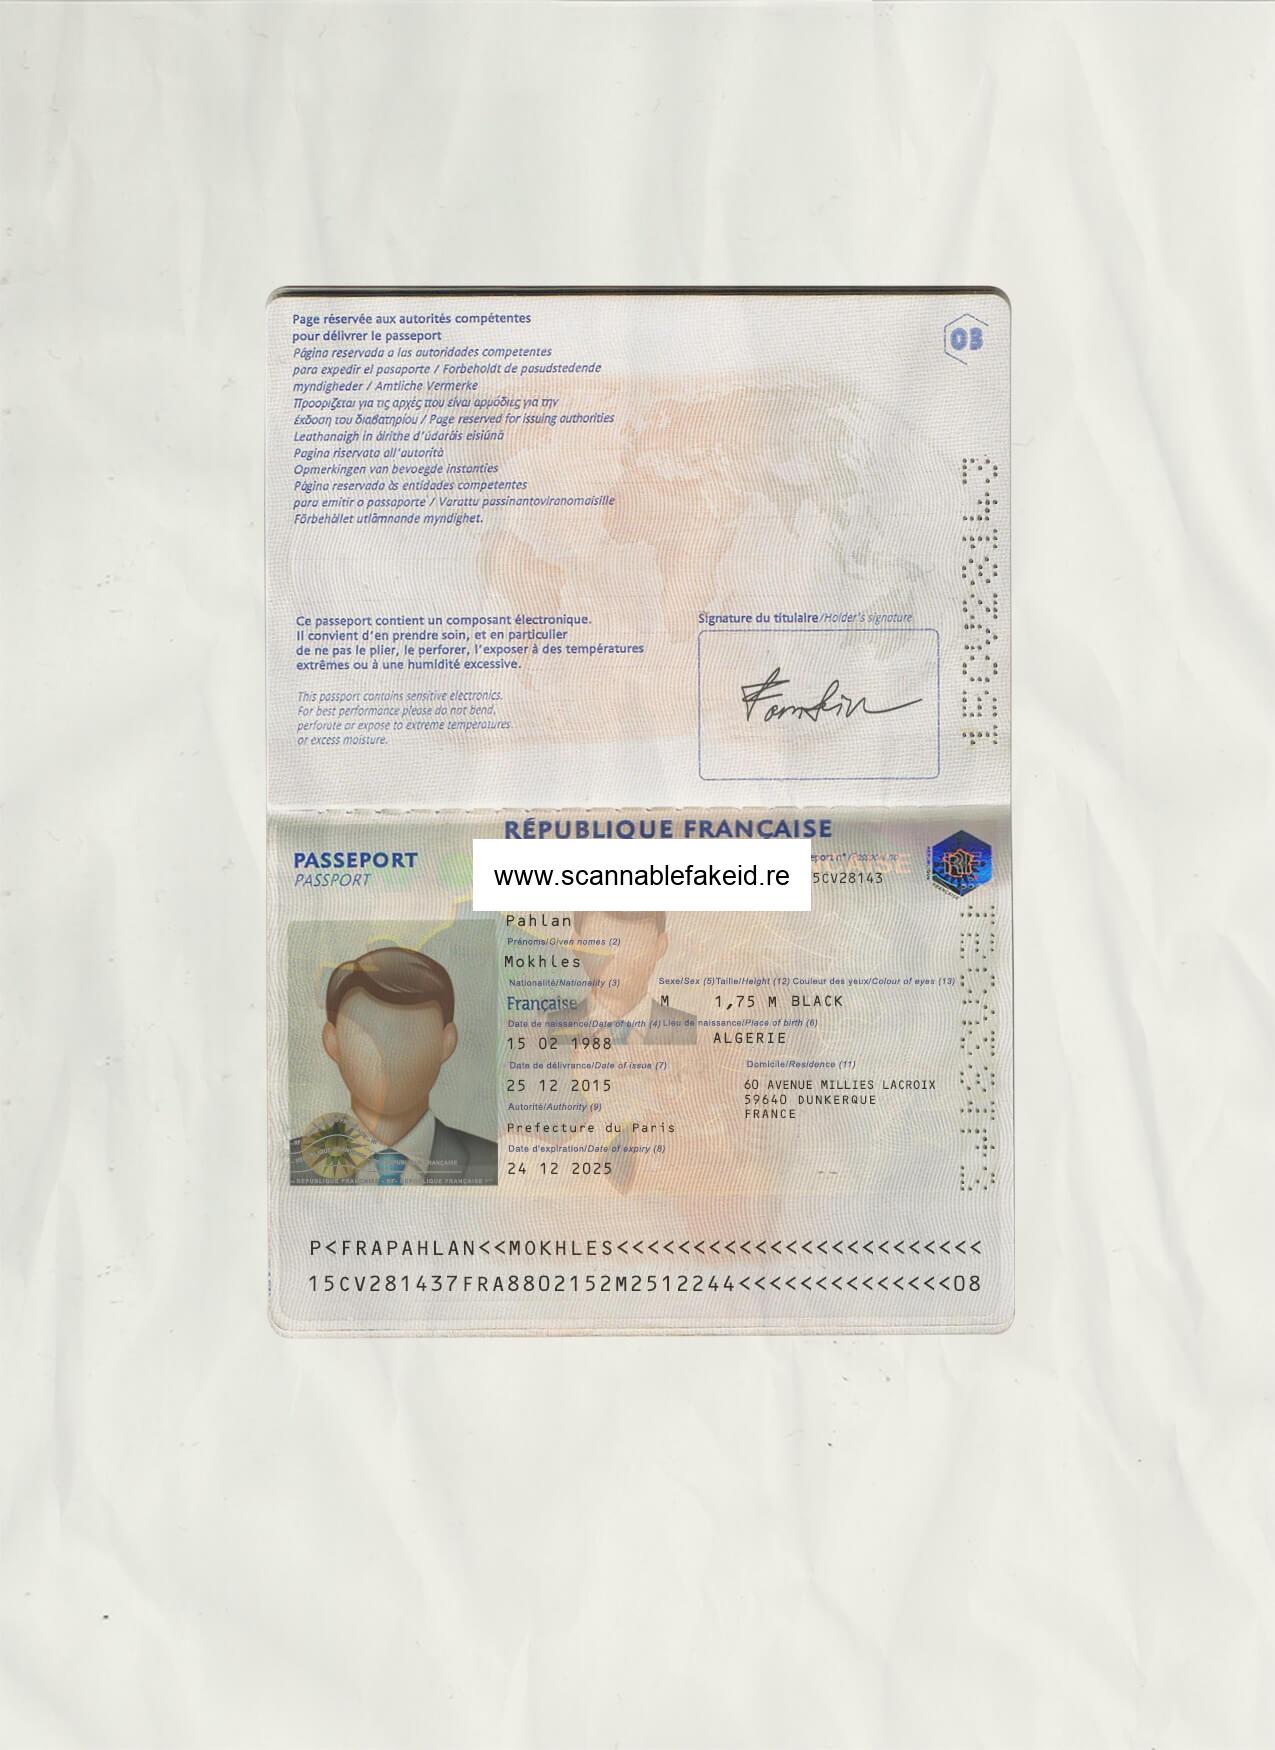 France Fake Passport - Buy Scannable Fake ID Online - Fake Drivers License